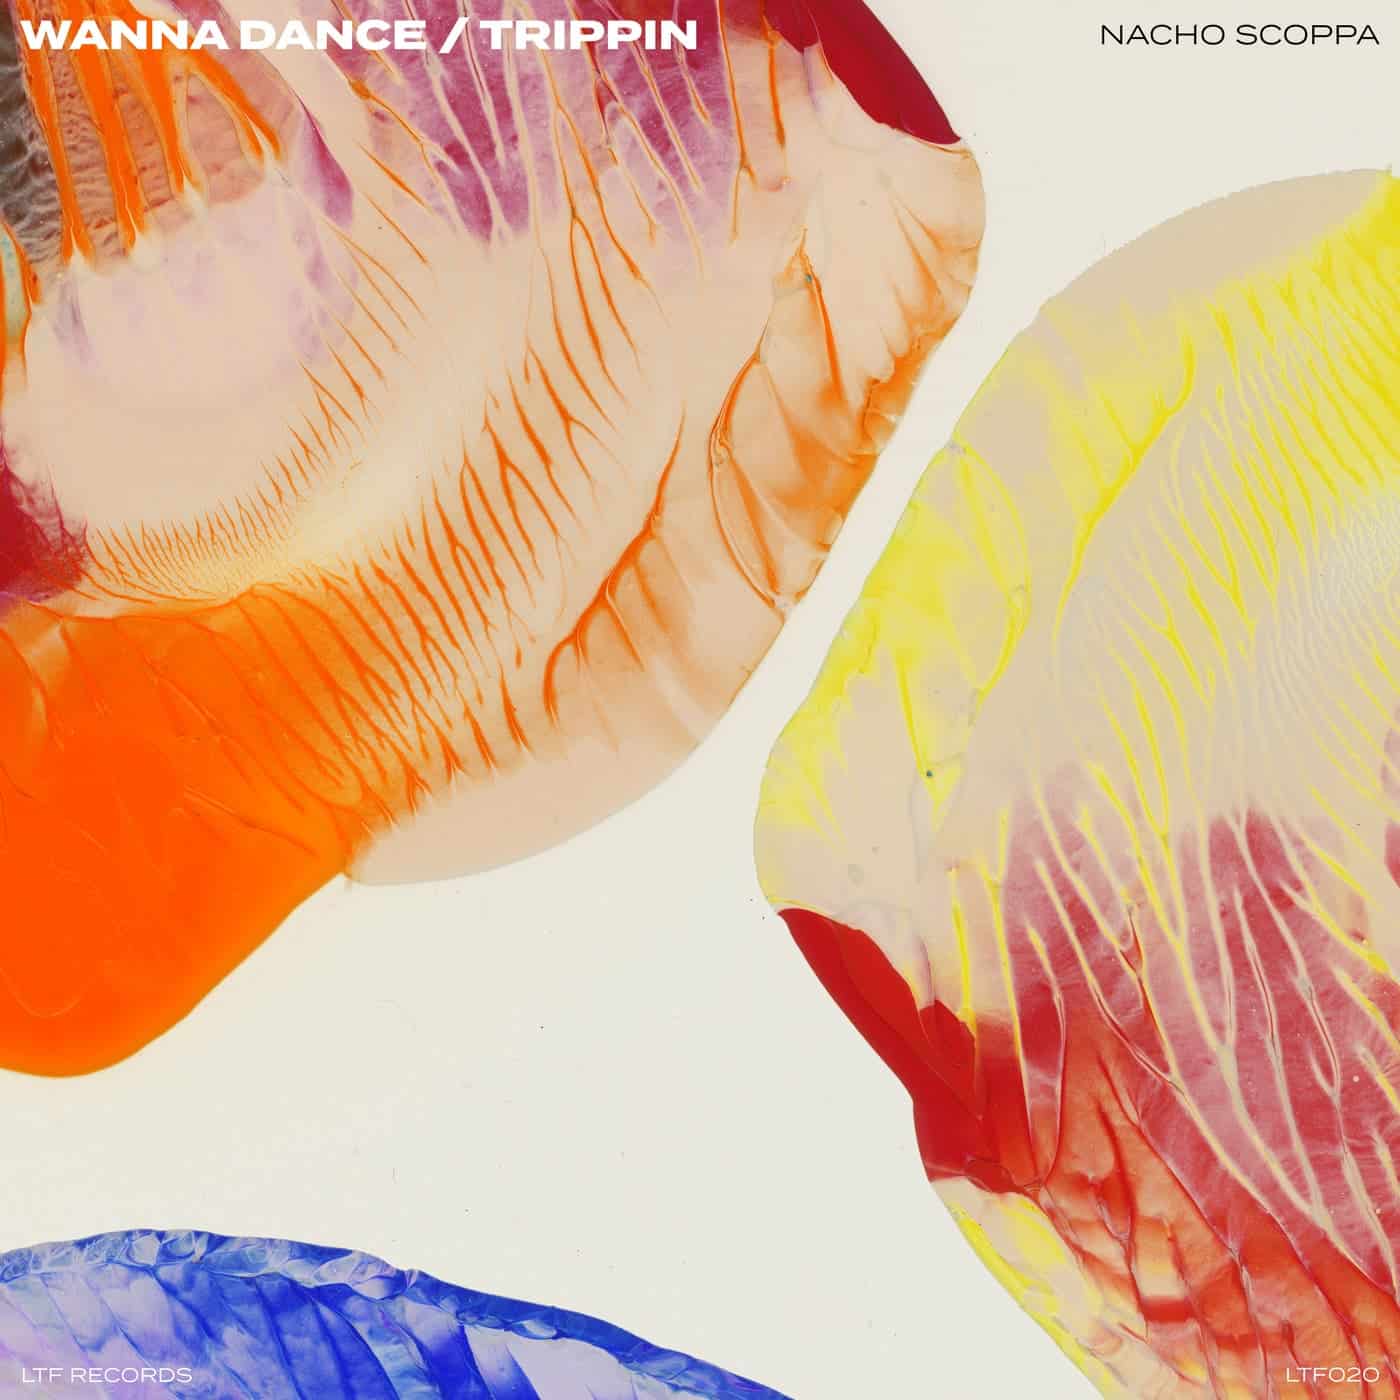 image cover: Nacho Scoppa - Wanna Dance / Trippin' / LTF020